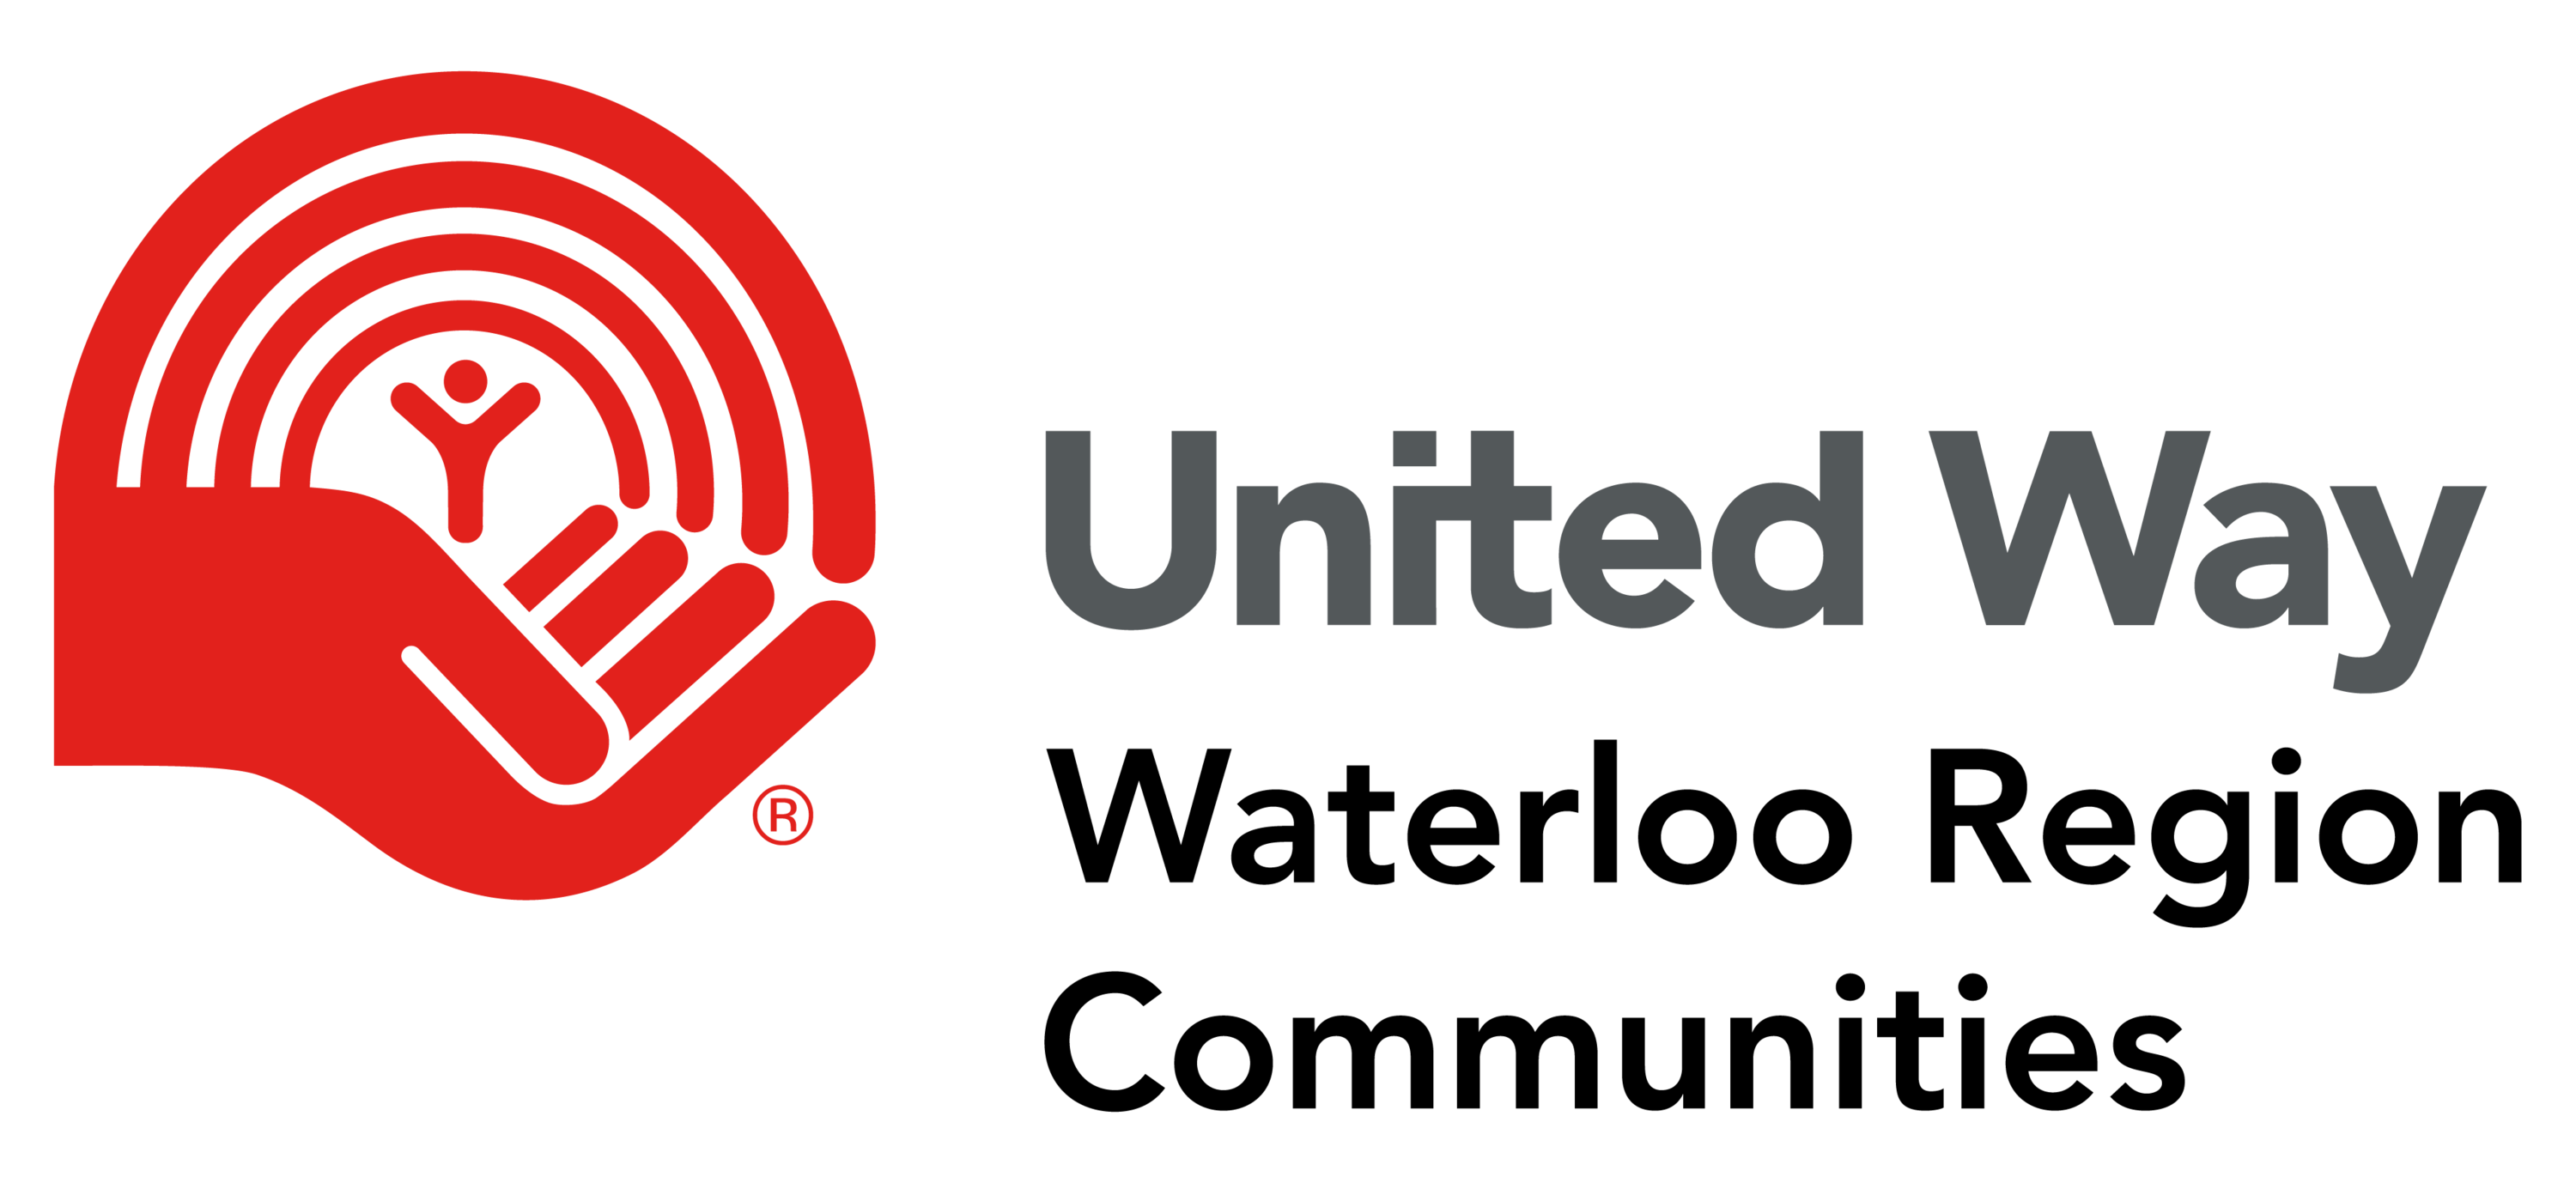 United Way Waterloo Region Communities Logo